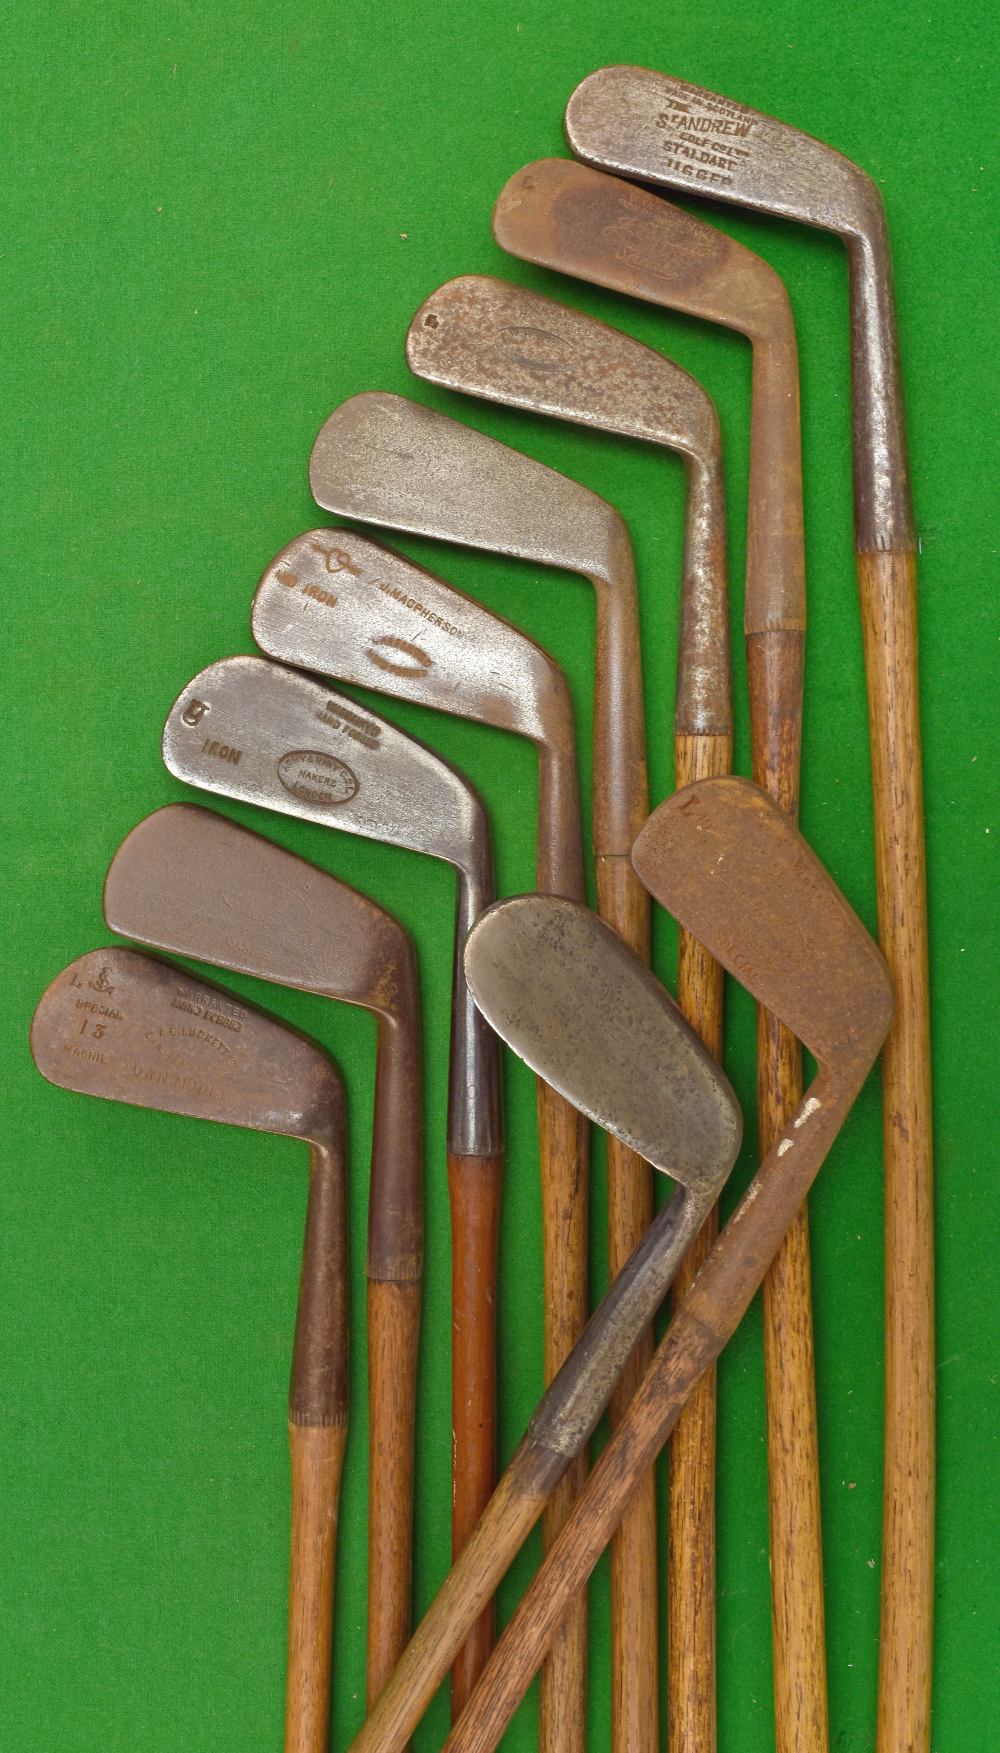 10x various irons – mashie niblick , jigger, lofting iron, mashies and a mid- iron – by Army and